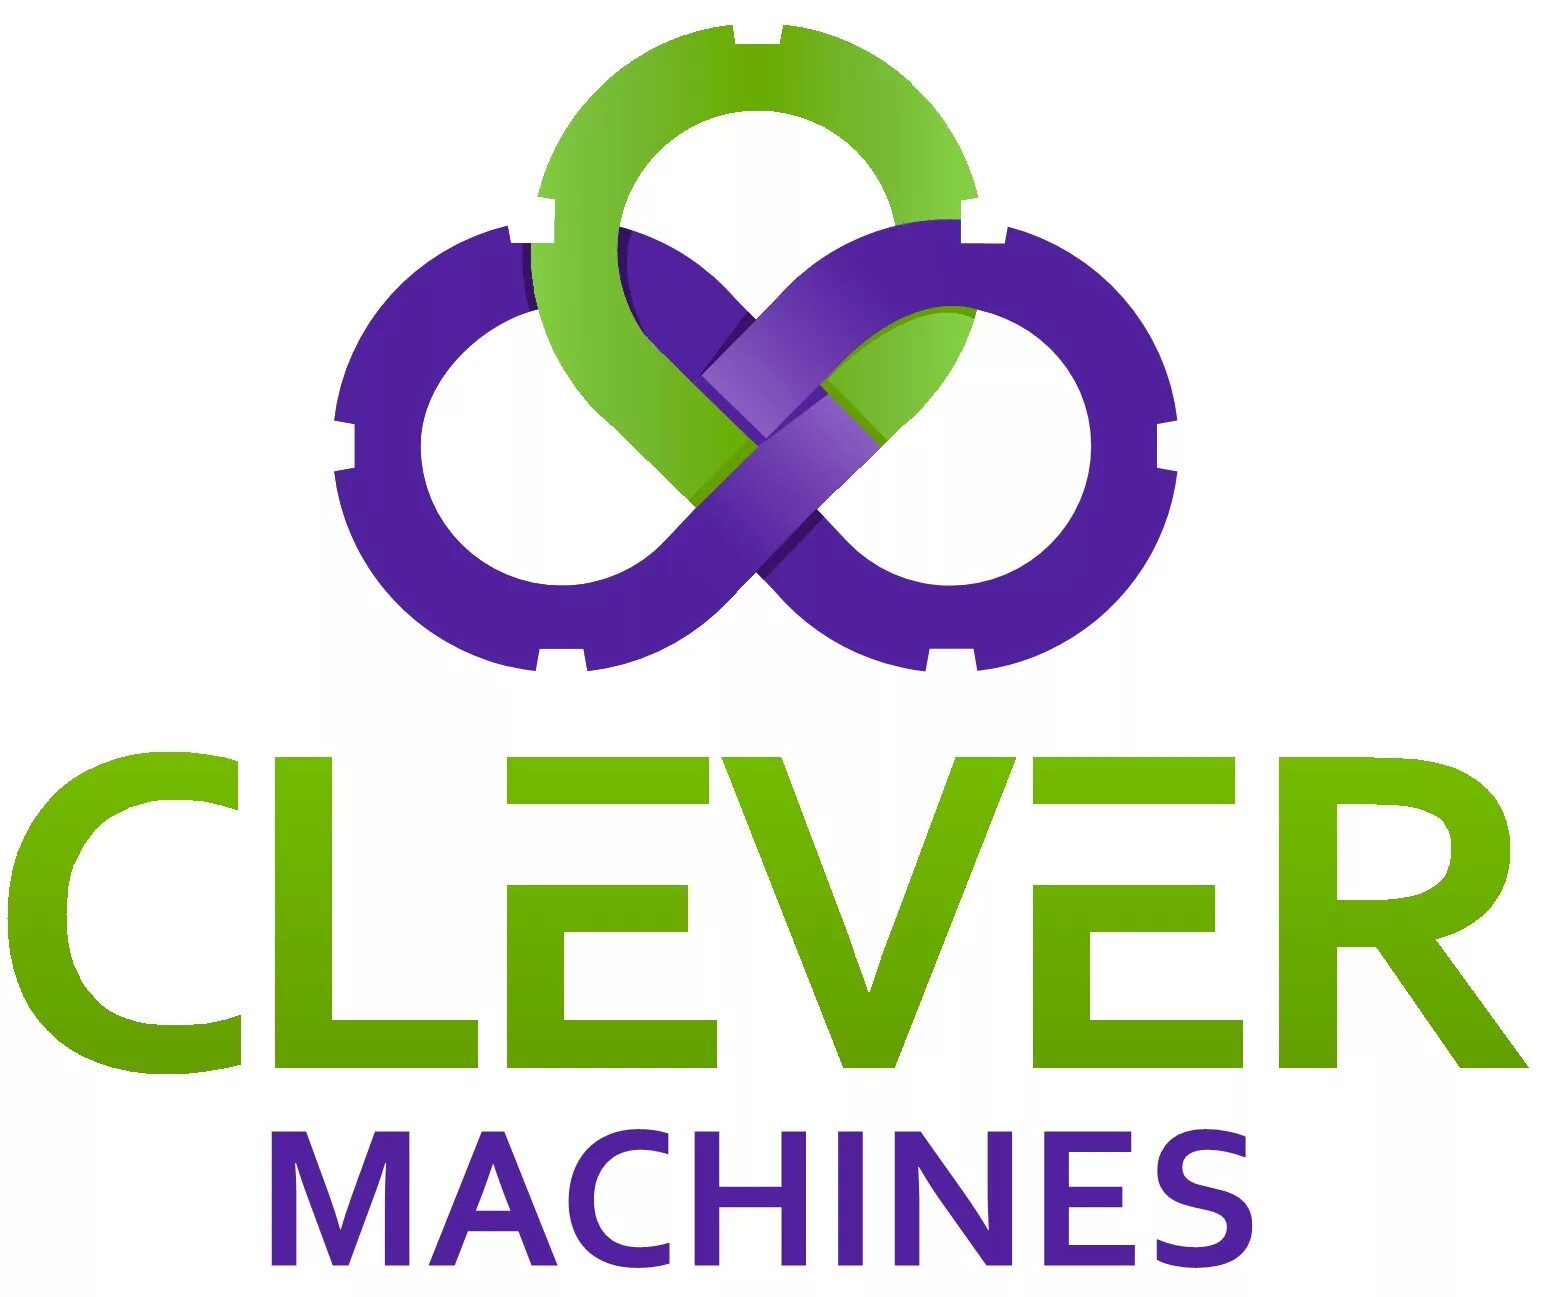 Ооо клевер сайт. Клевер. Clever лого. Clever Machines. Эмблема ООО Клевер.